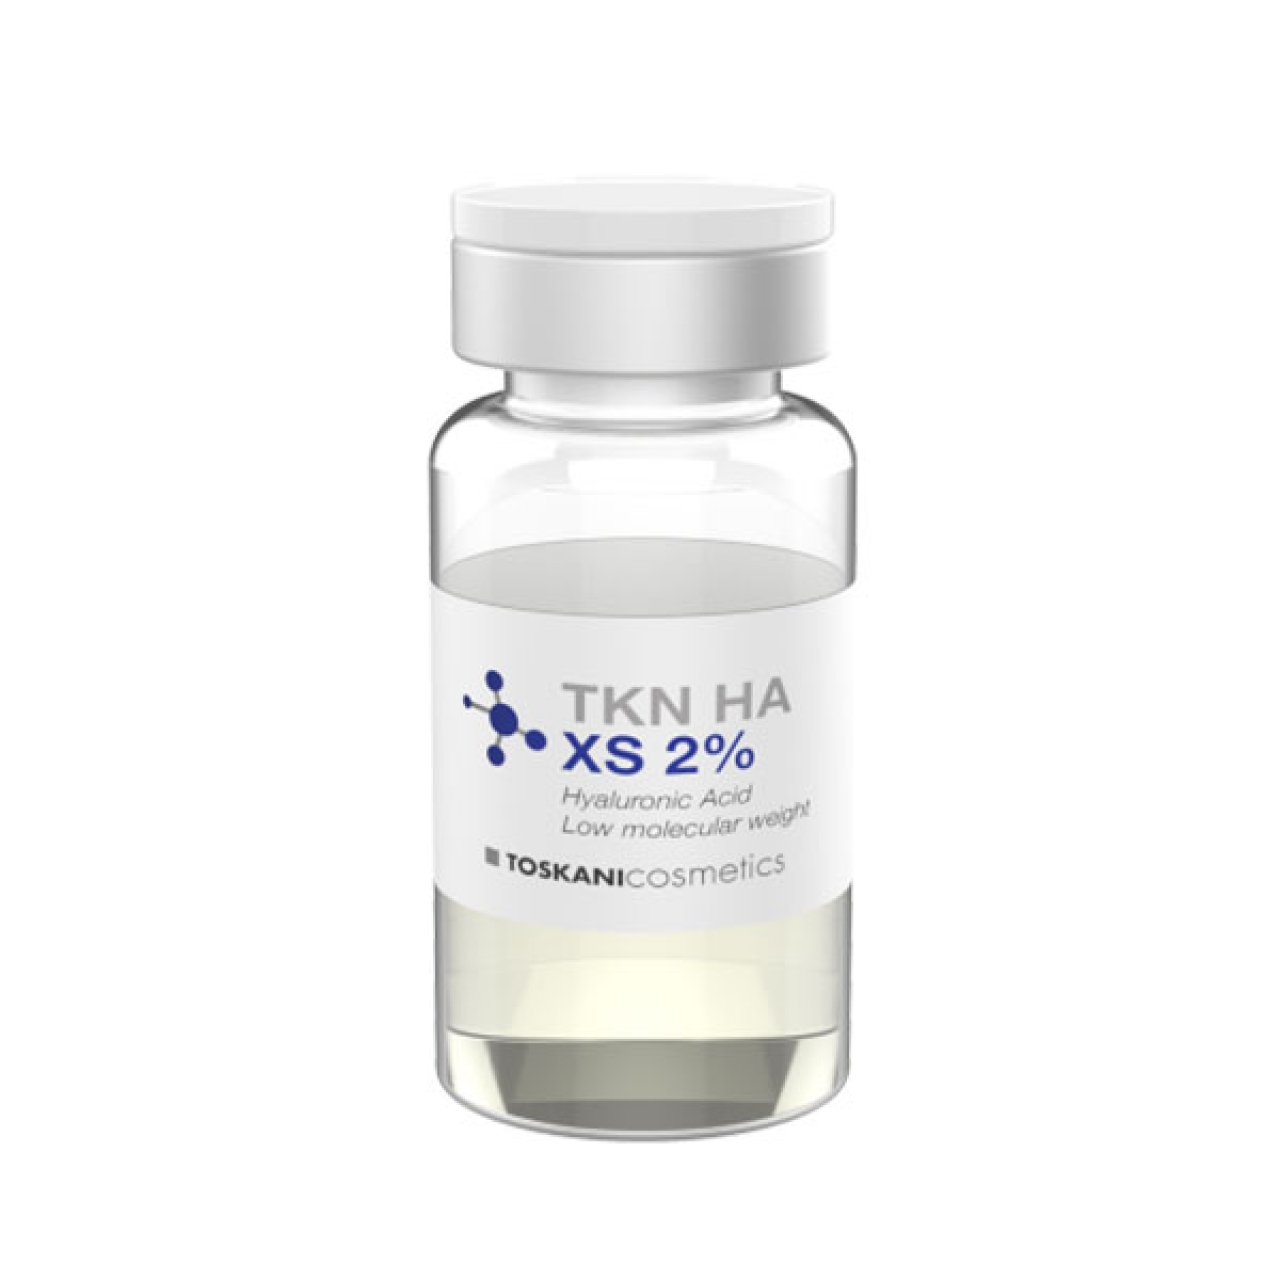 کوکتل آبرسان هیالورونیک اسید توسکانی مدل XS 2%